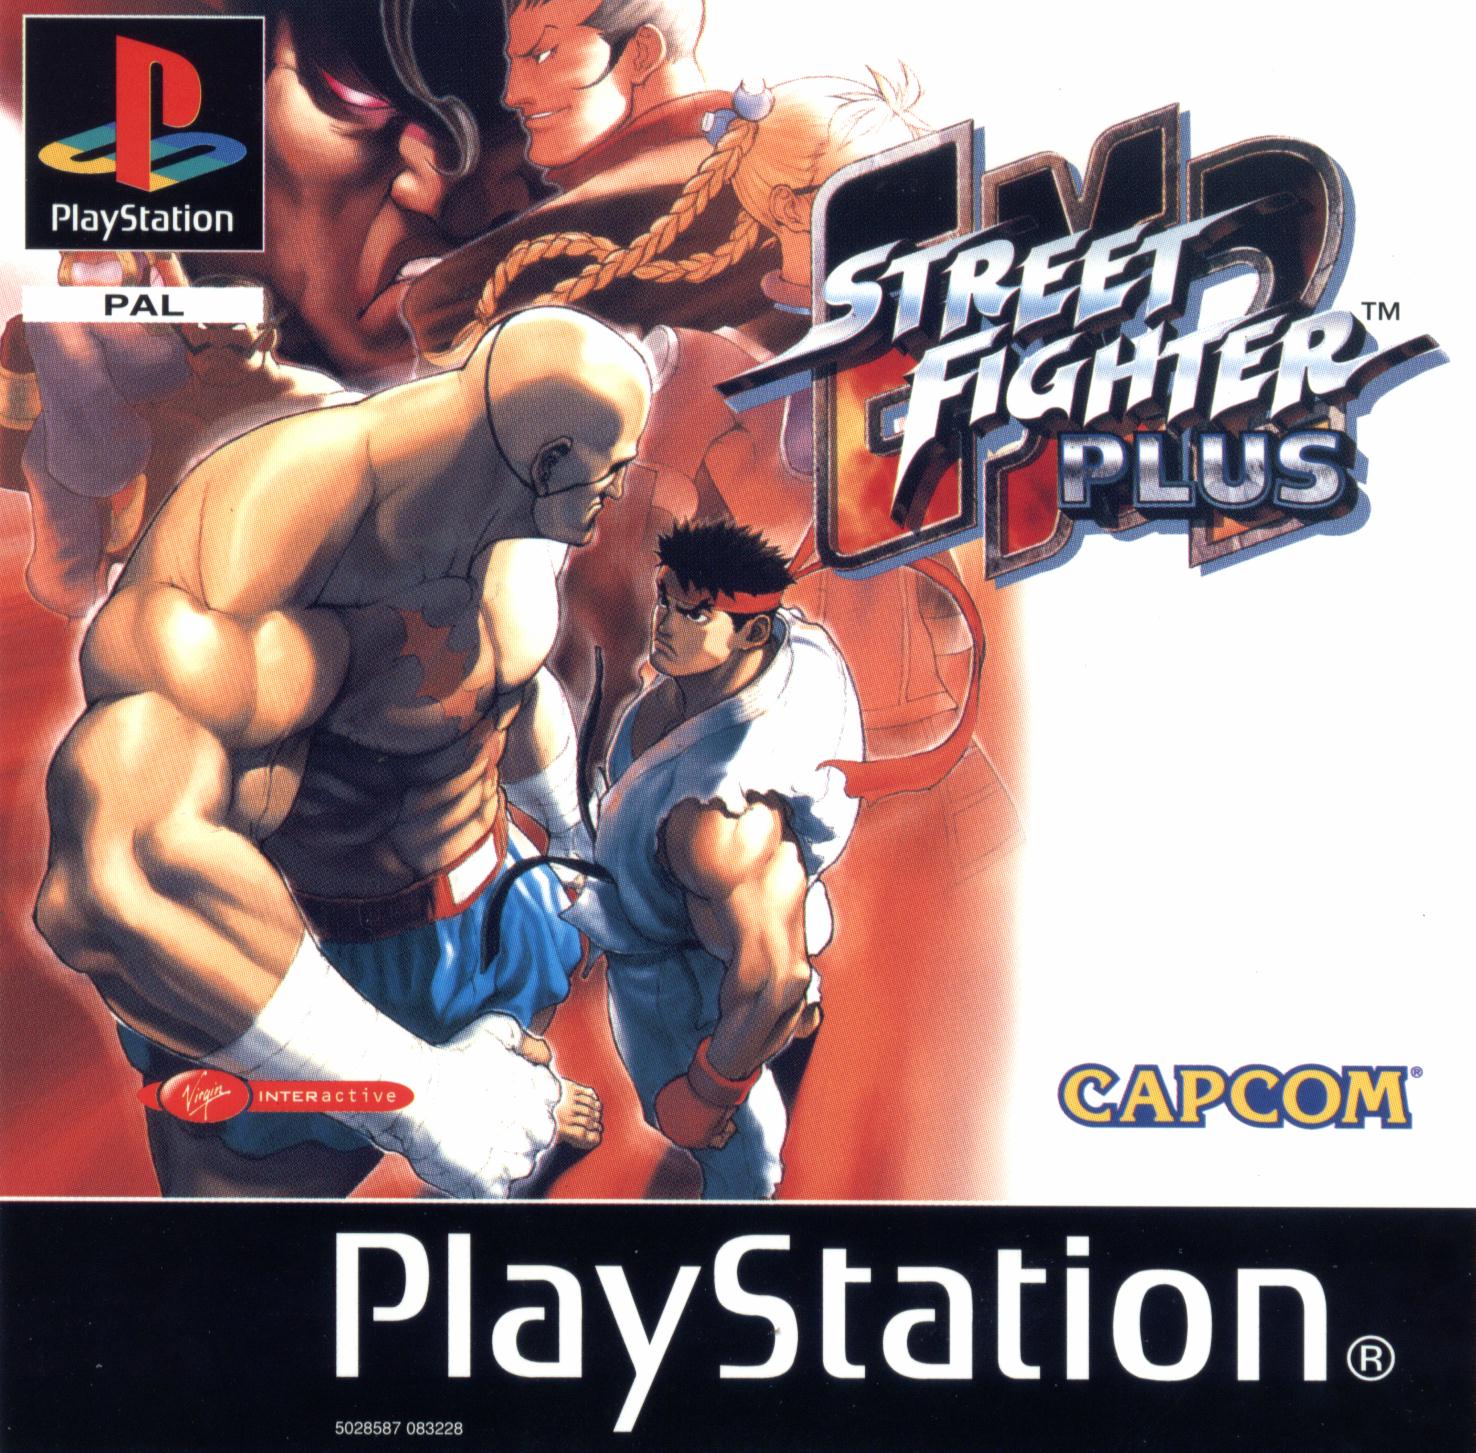 Street Fighter ex2 Plus | Playstation 1 Game | Genre: Fighter | 20MB